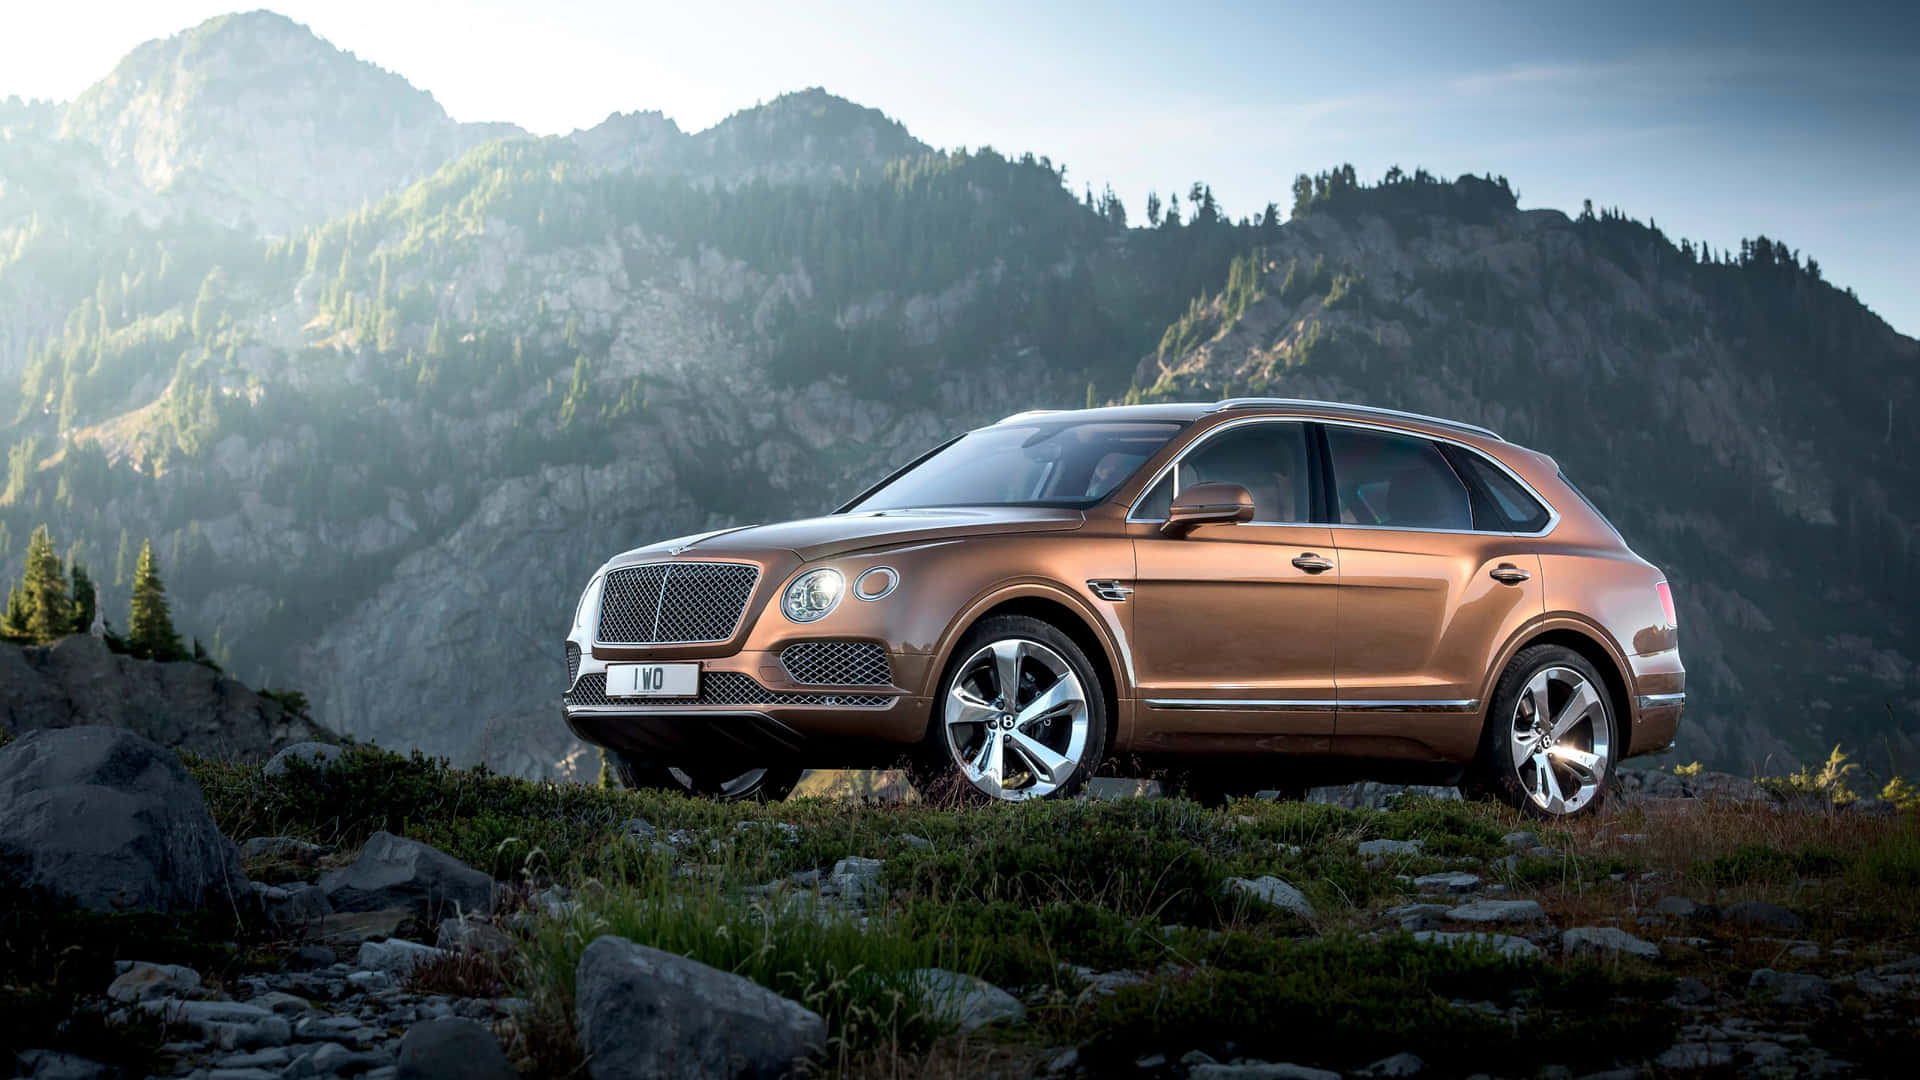 Luxurious Off-roading in a Bentley Bentayga Wallpaper